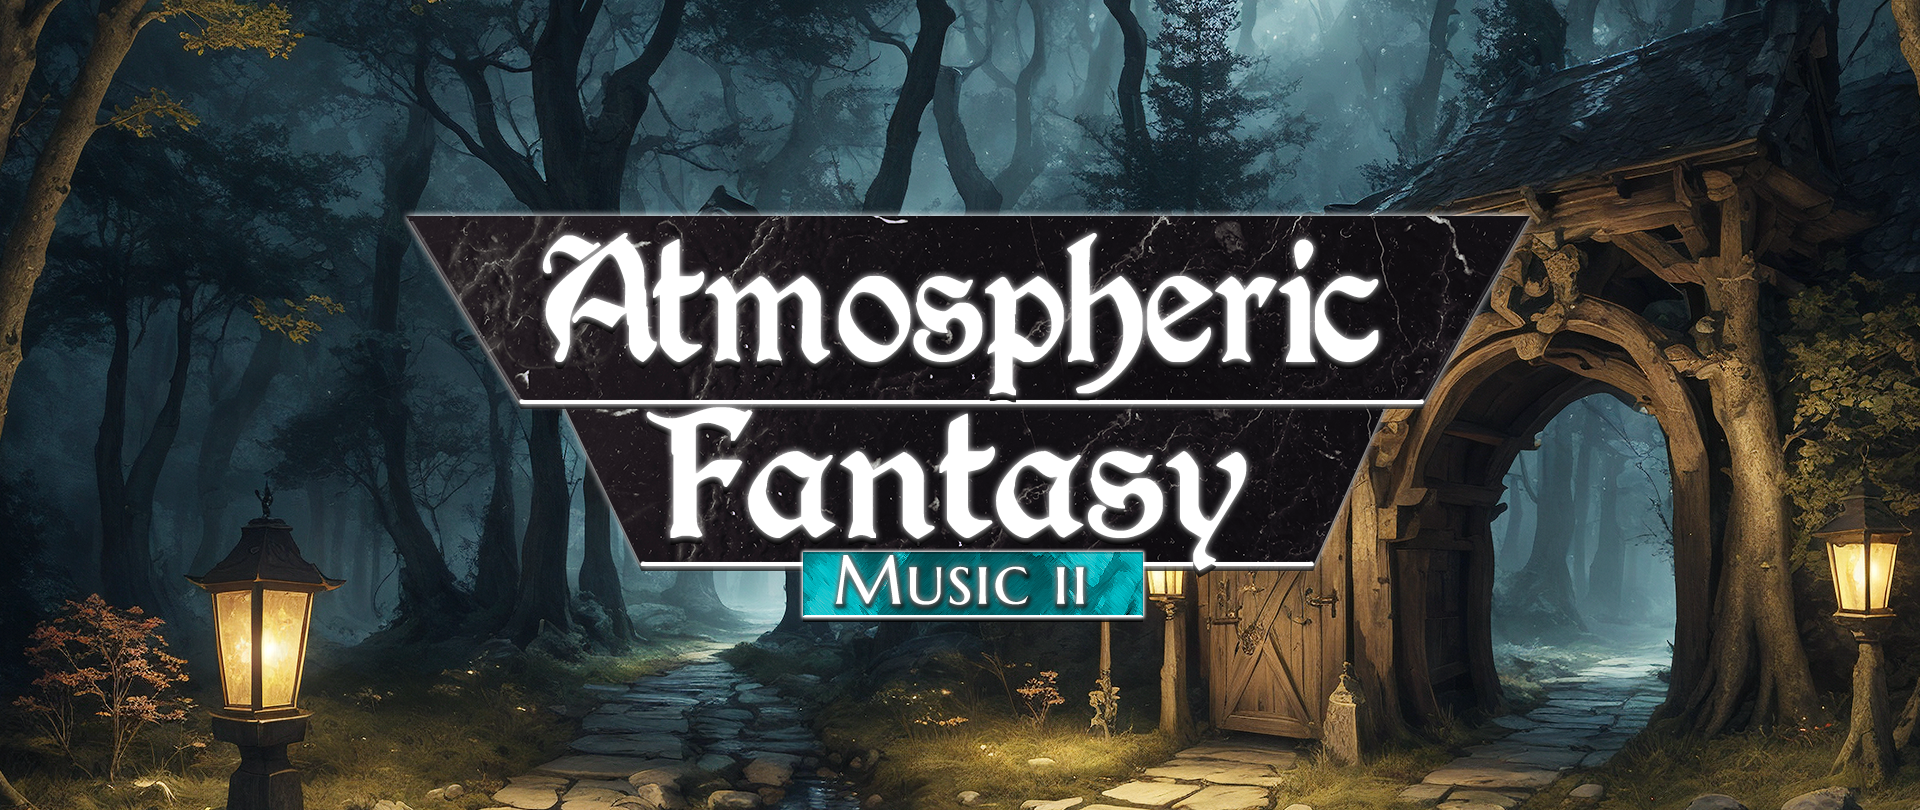 Atmospheric Fantasy Music 2